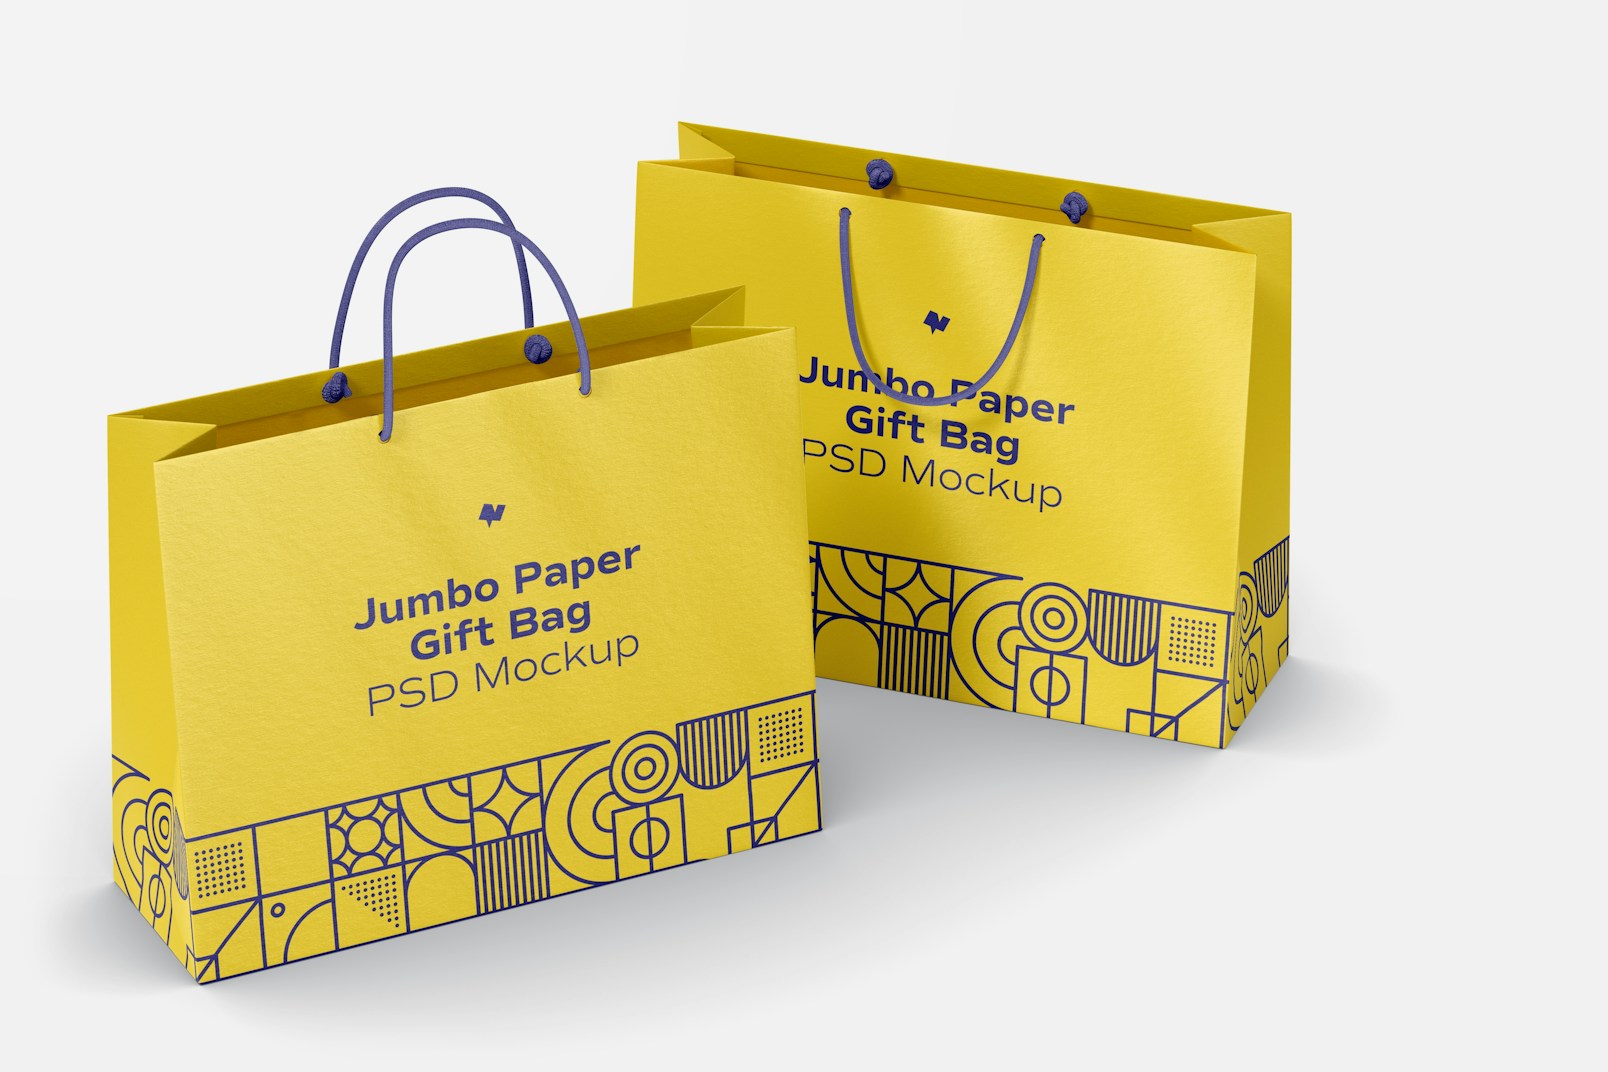 Jumbo Paper Gift Bags With Rope Handle Mockup